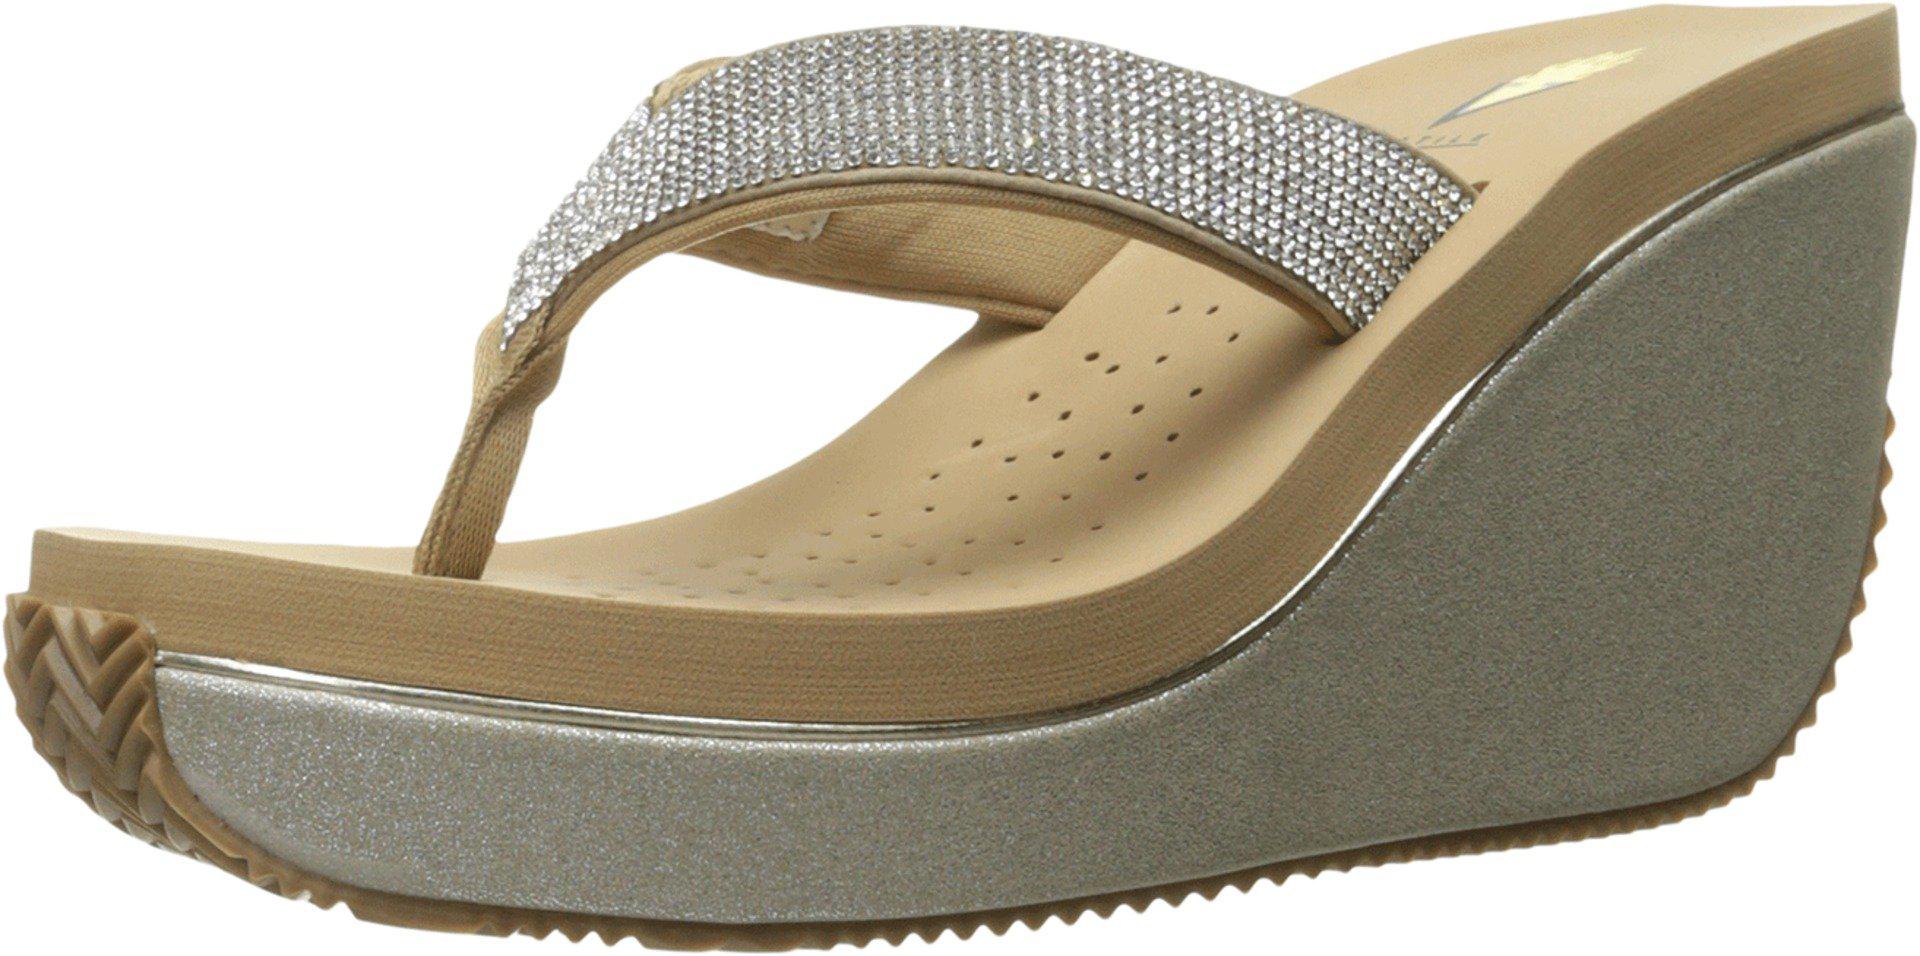 Platforms & Wedges Shoes Sandals VOLATILE Womens Glimpse Wedge Sandal